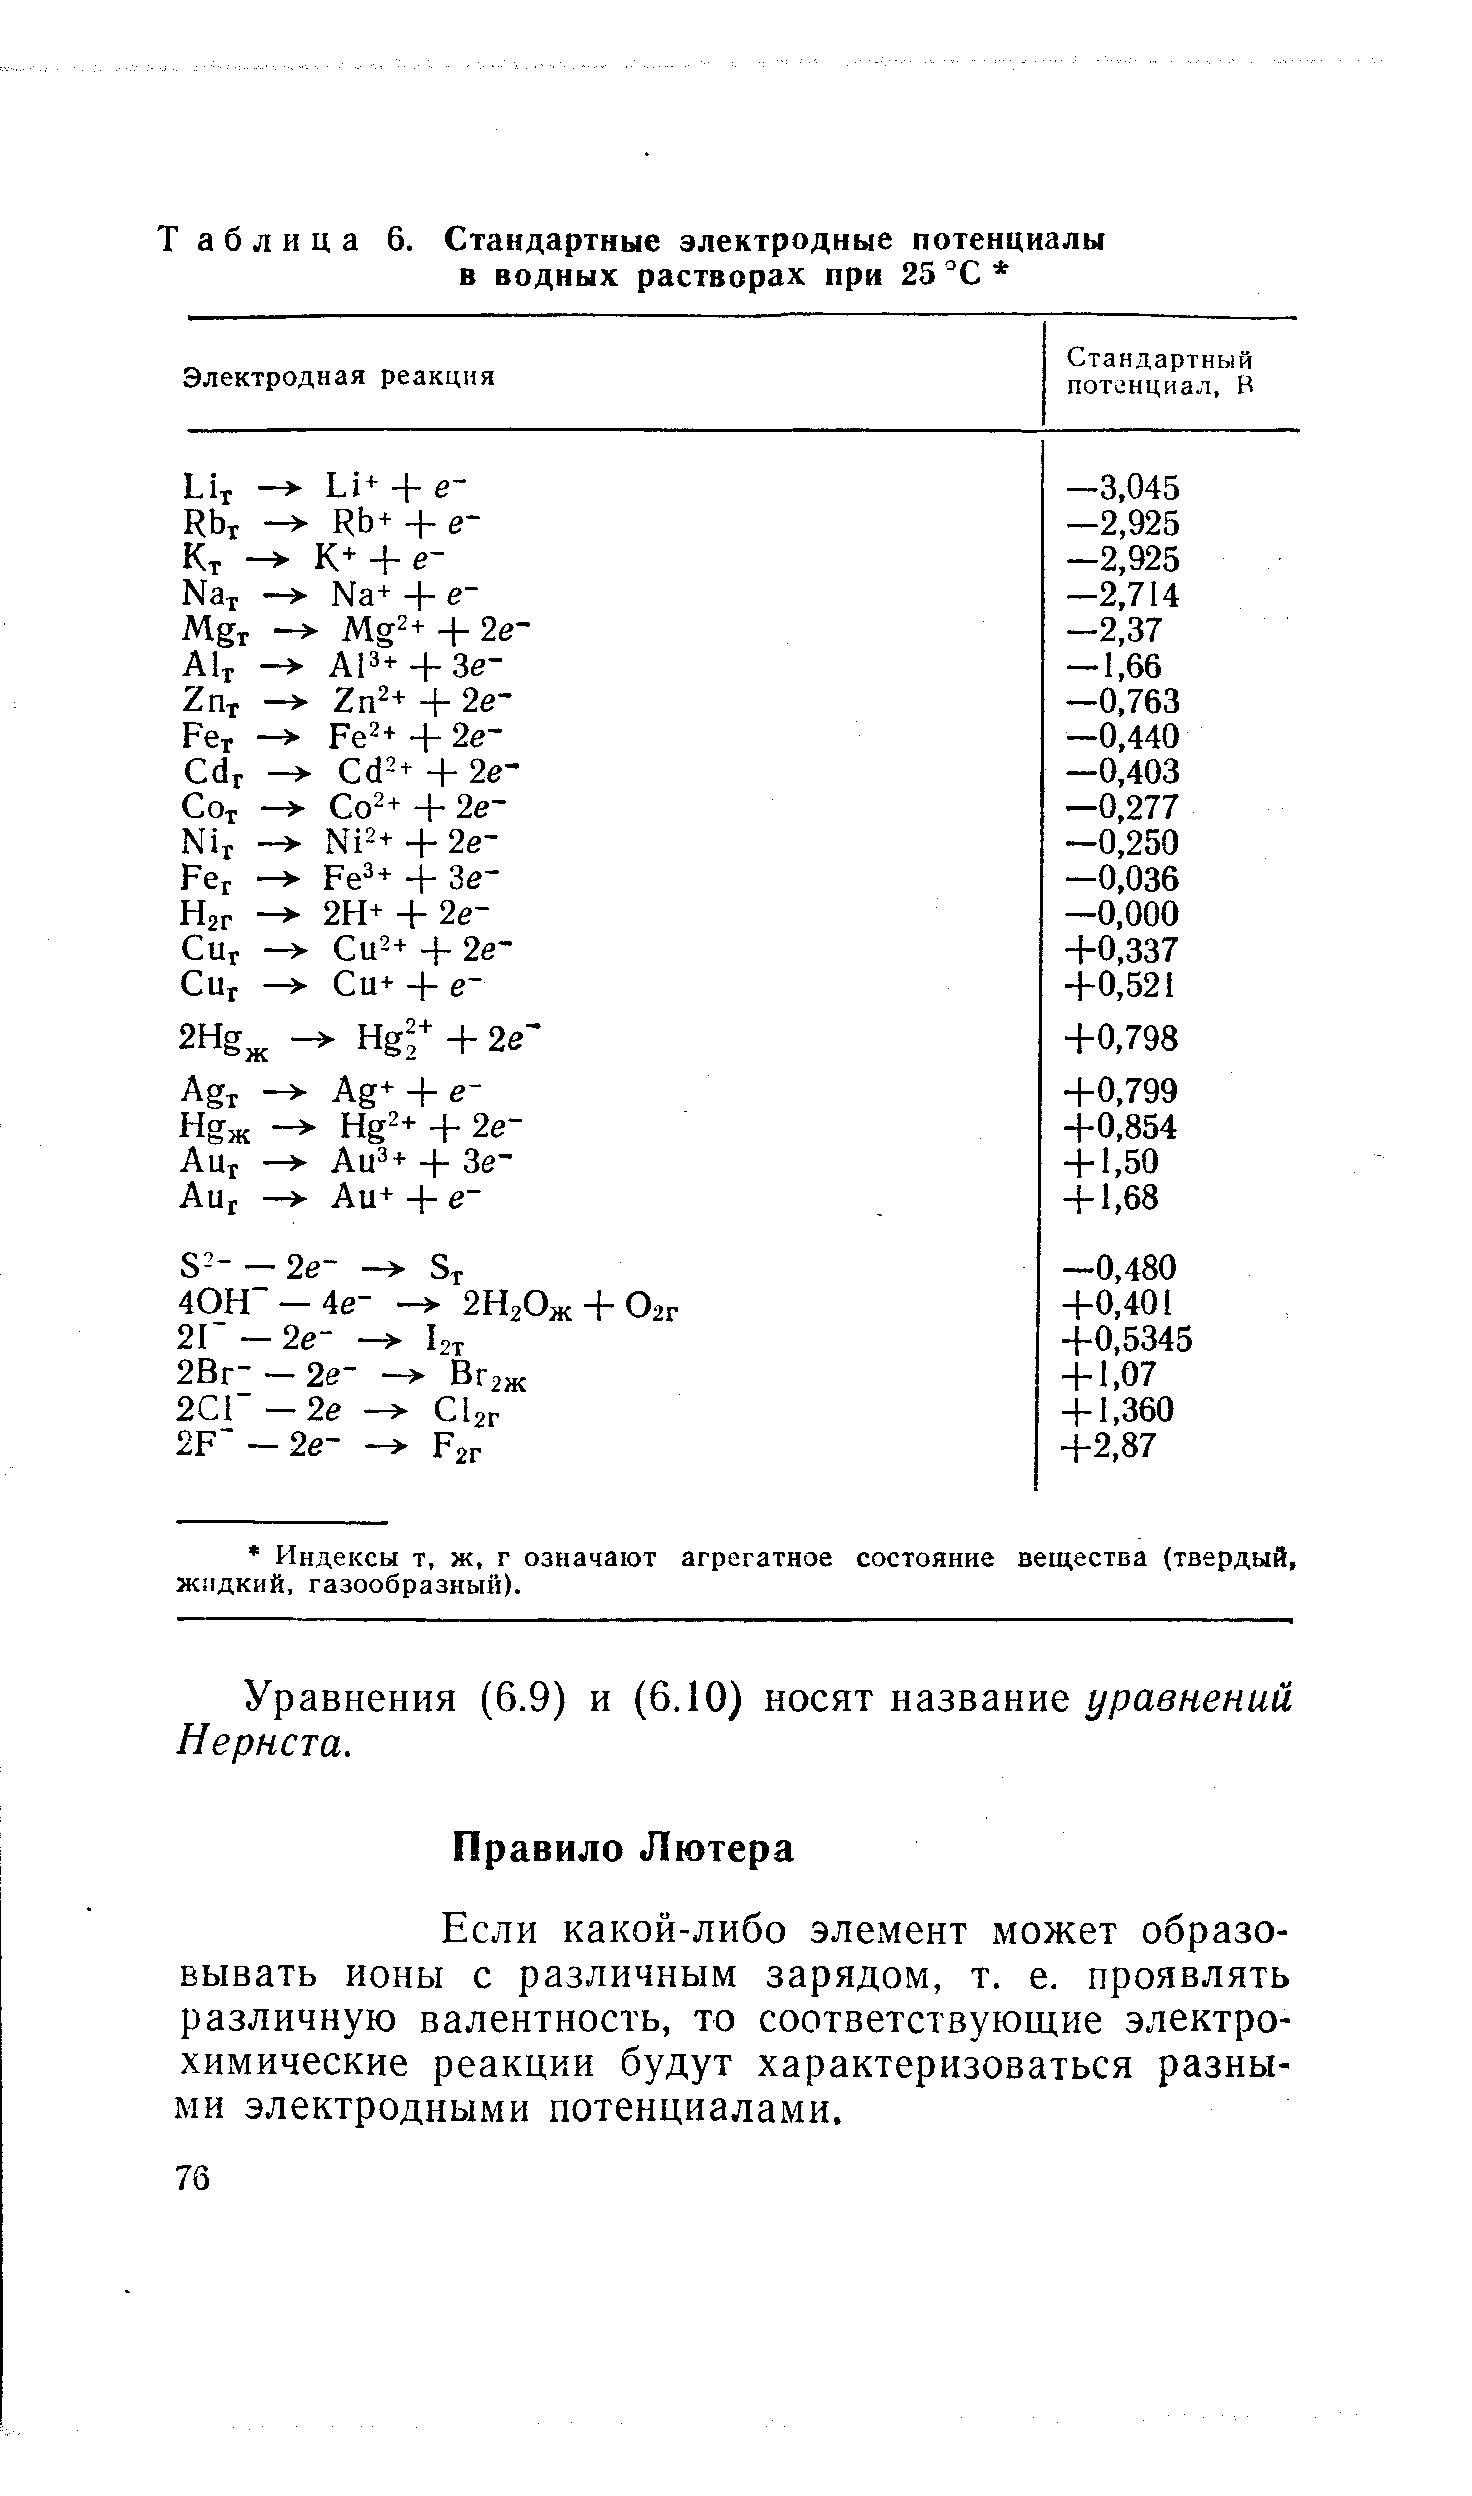 Уравнения (6.9) и (6.10) носят название уравнений Нернста.